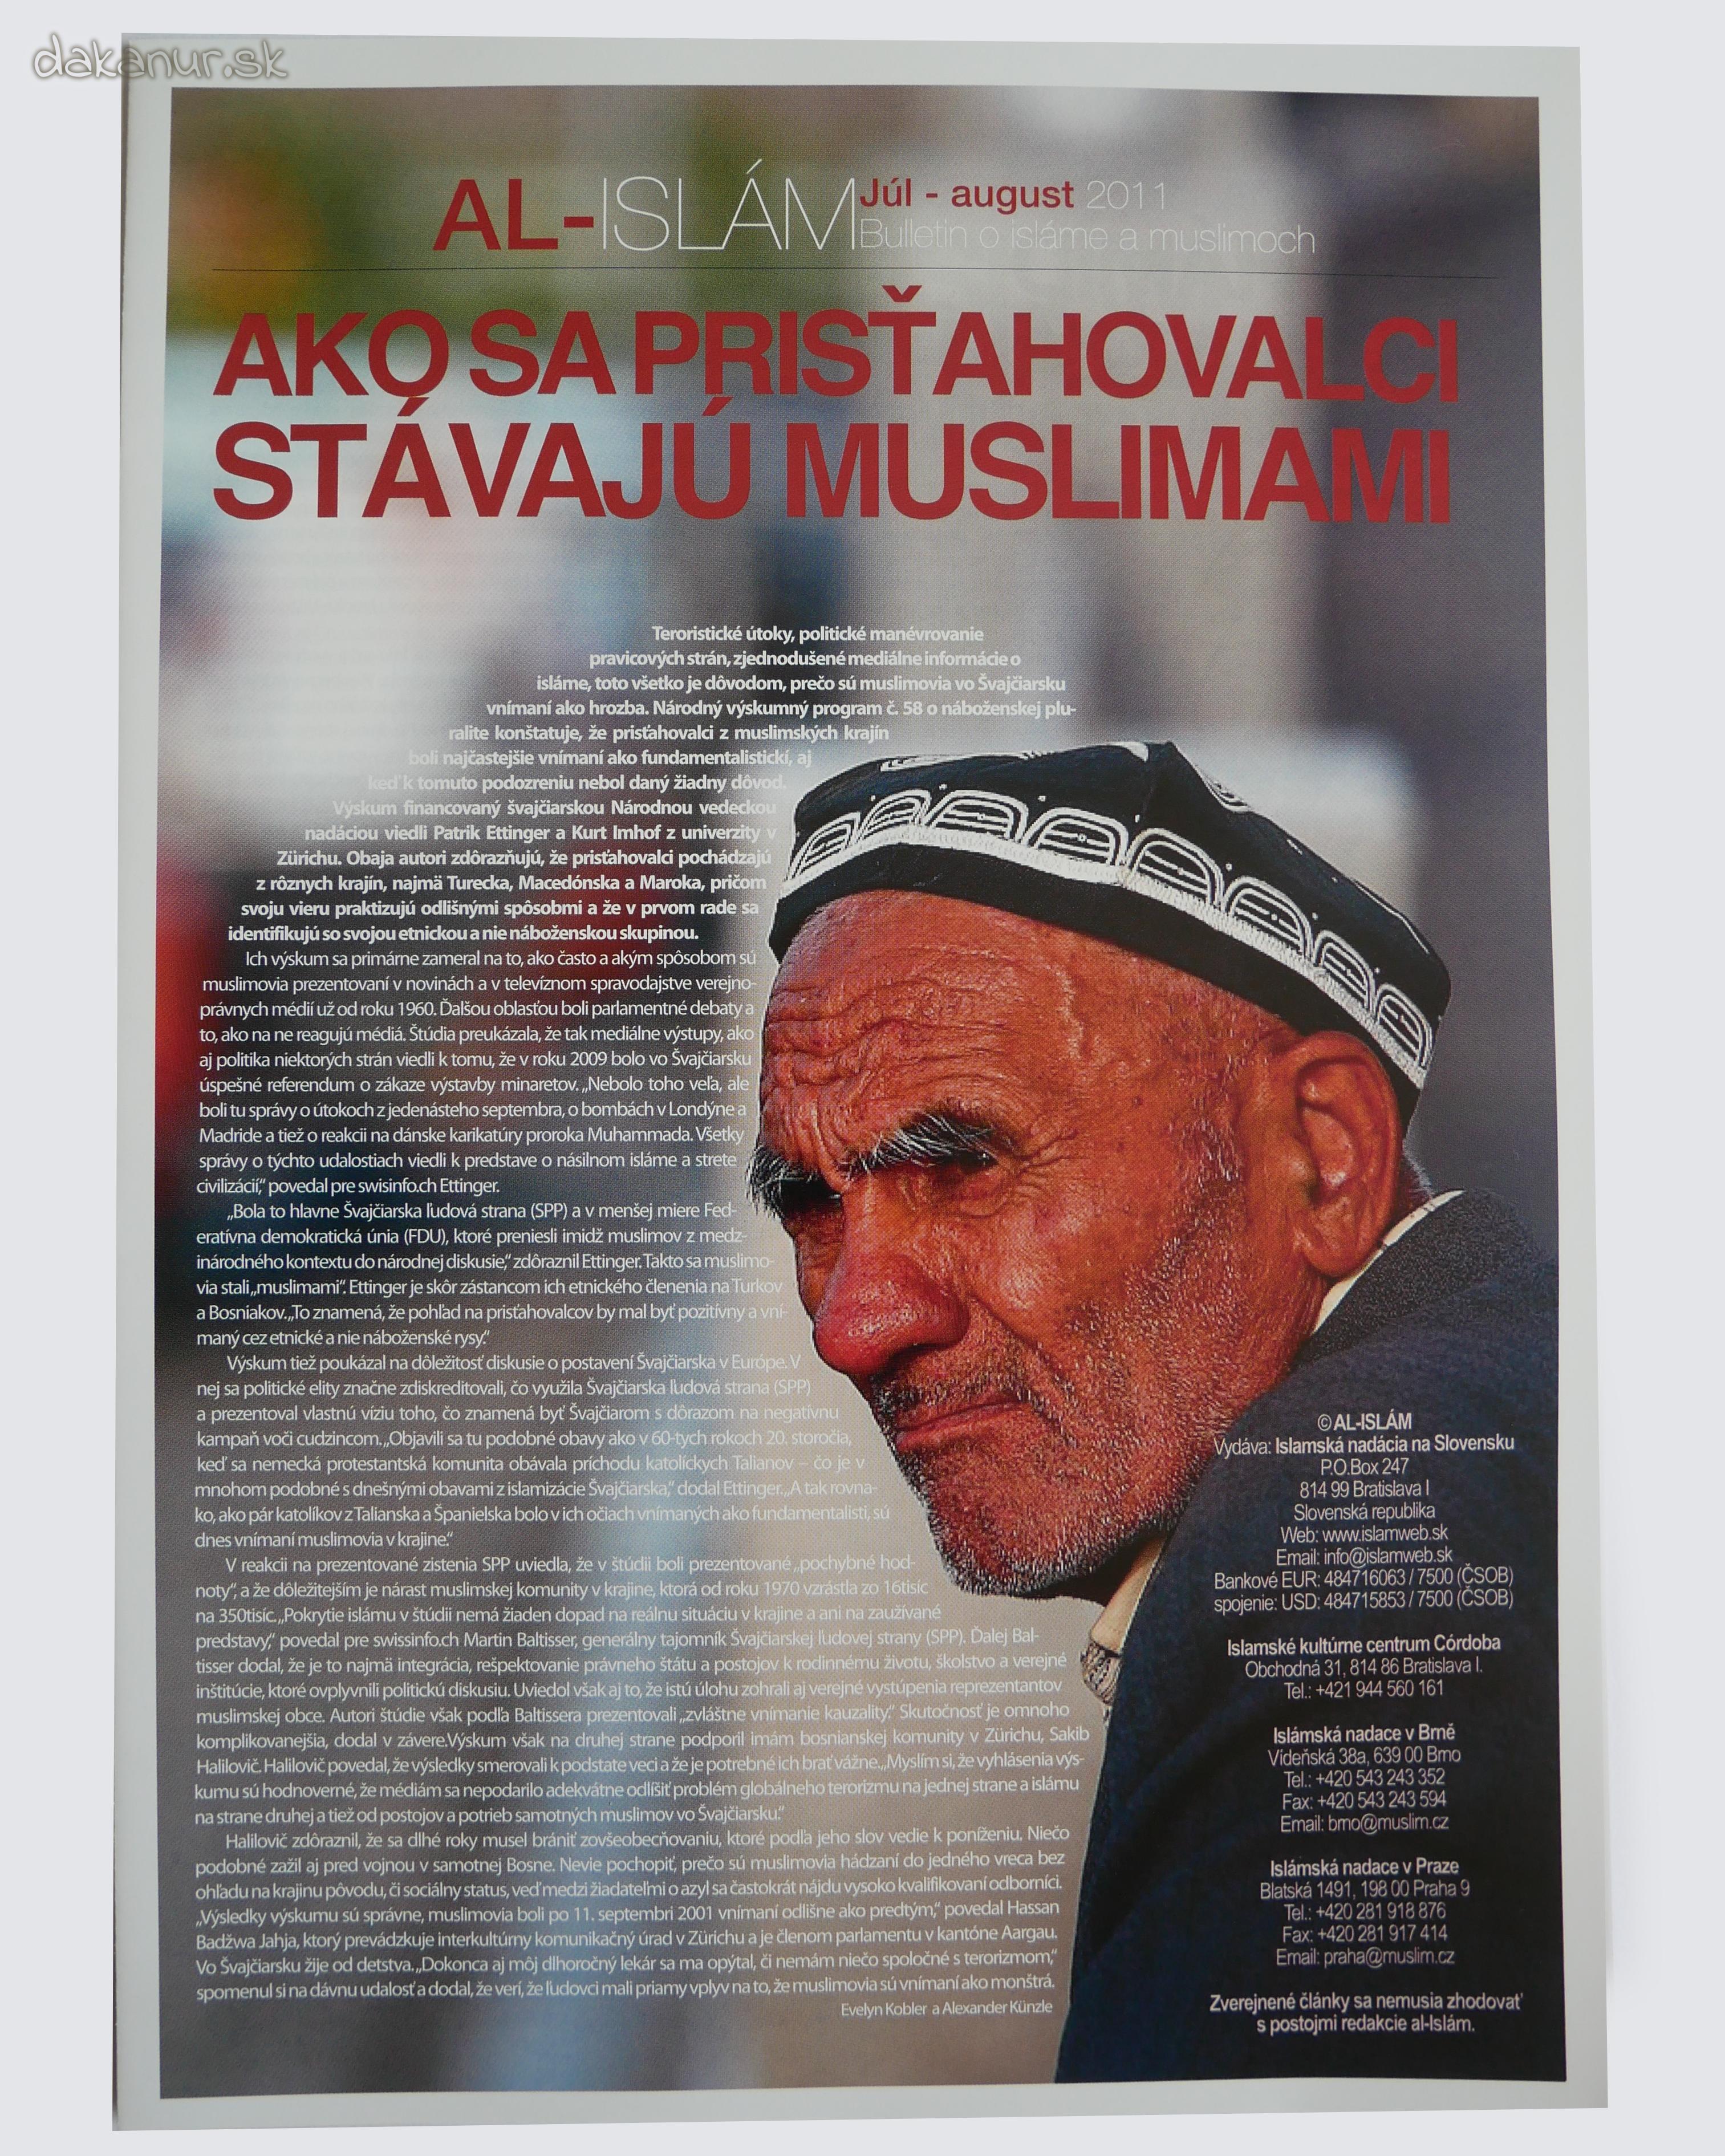 Časopis Al-islam júl-august 2011